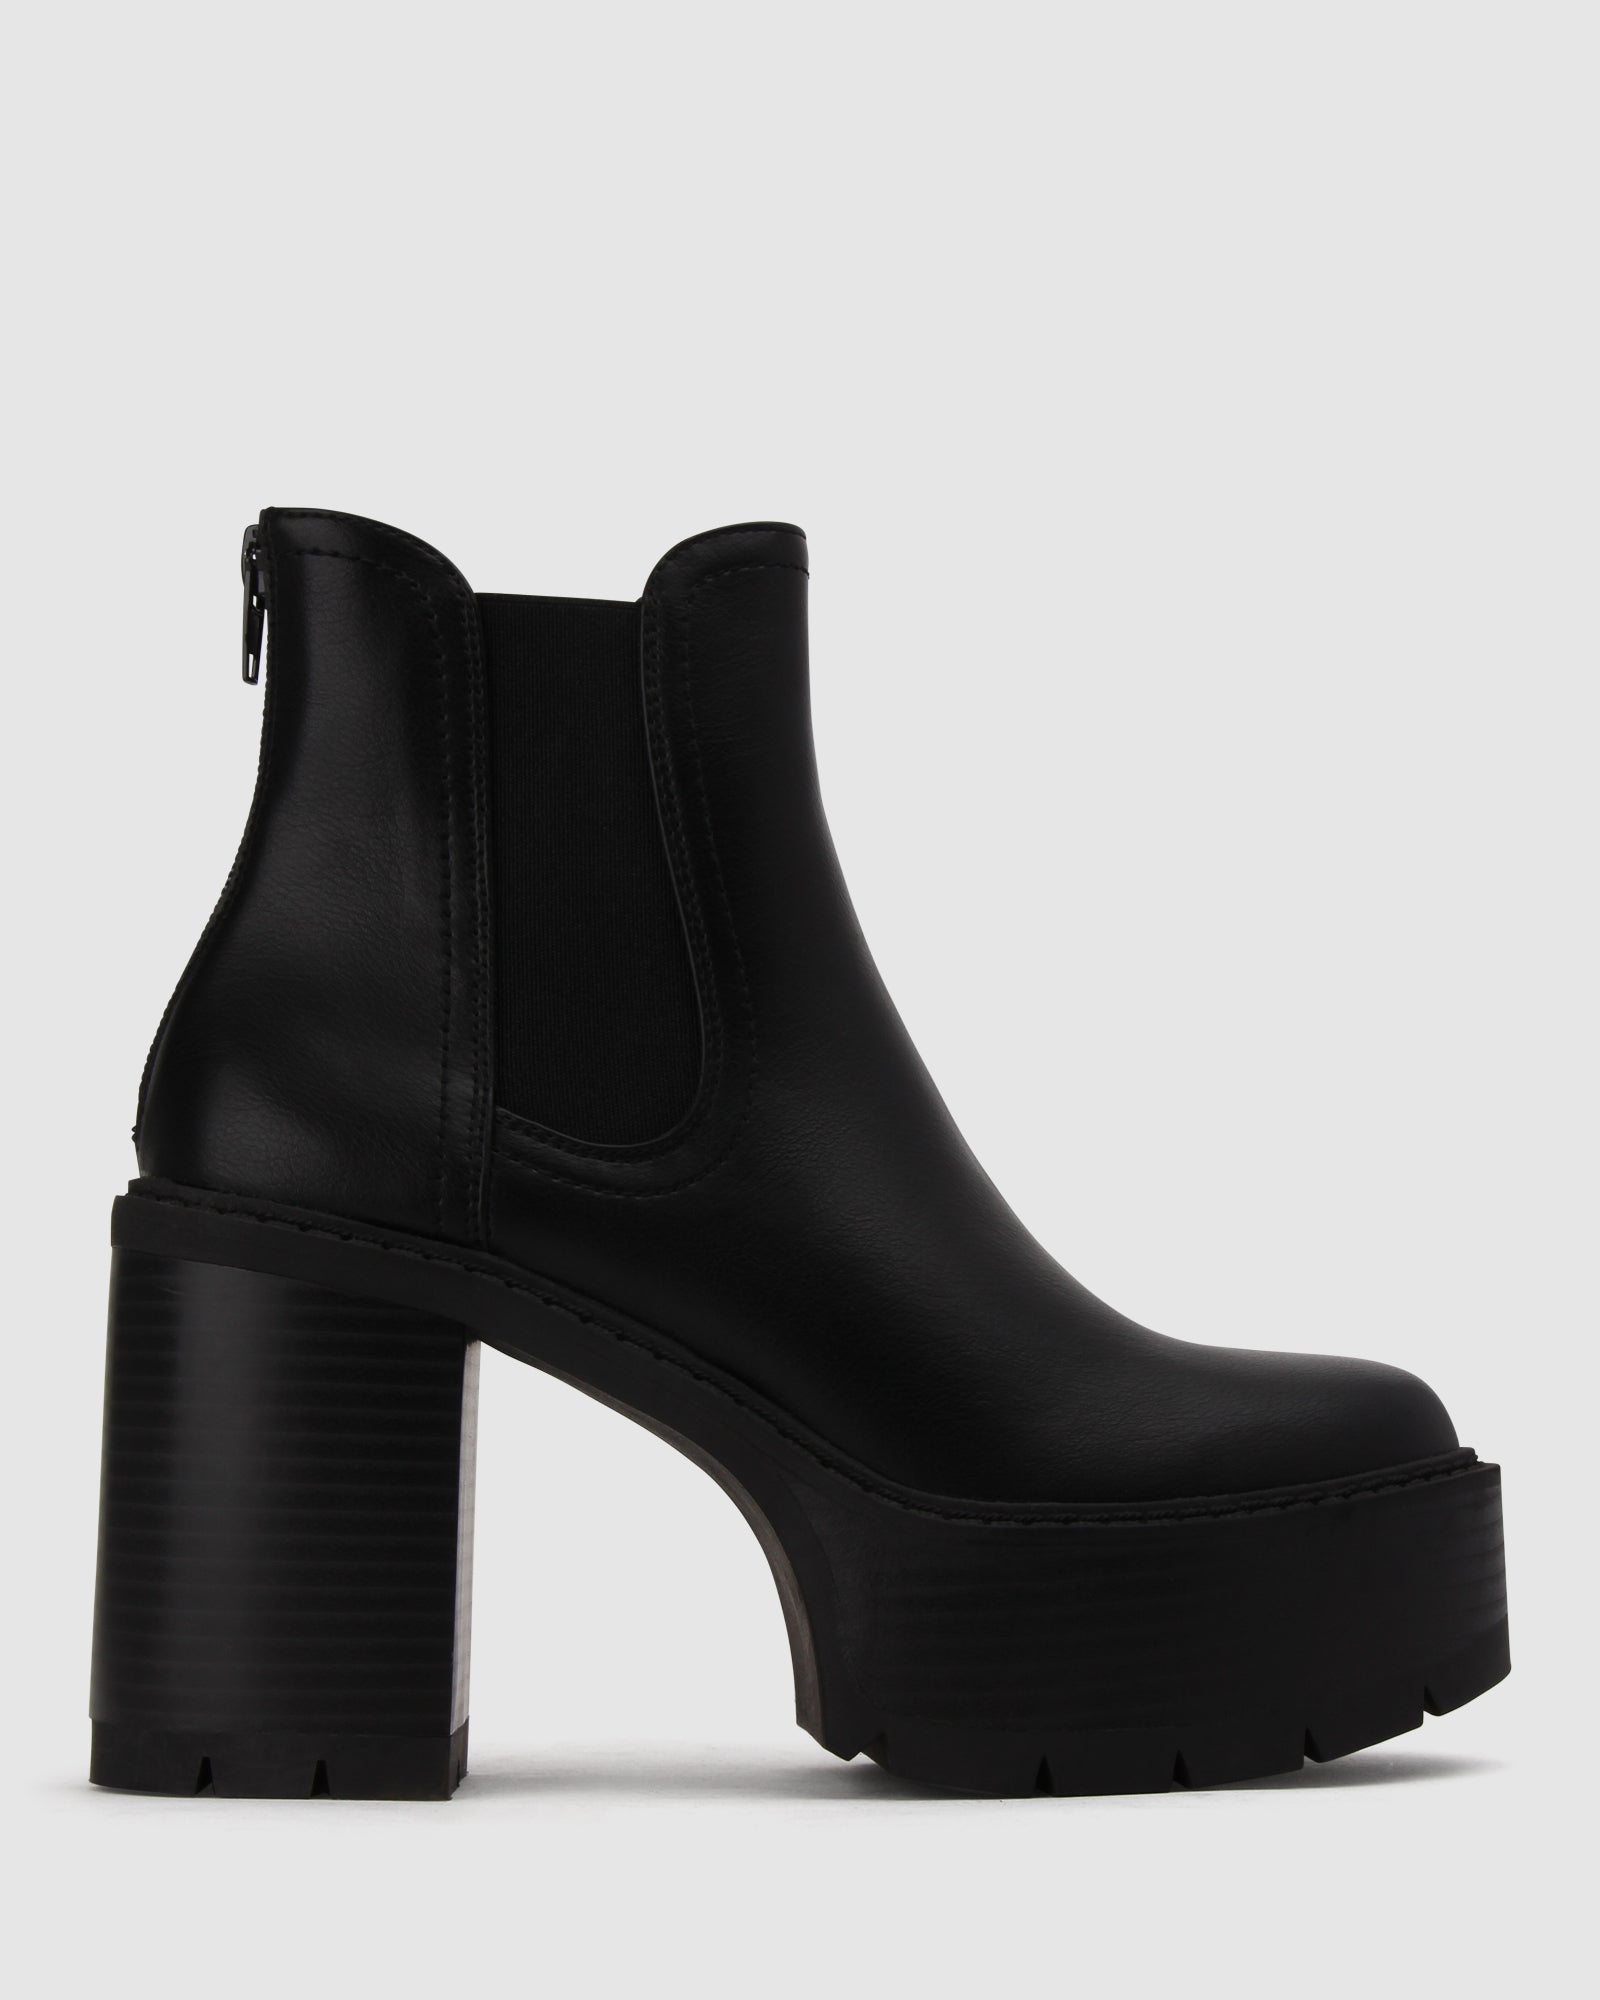 Buy TORNADO High Block Heel Chelsea Boots by Betts online - Betts